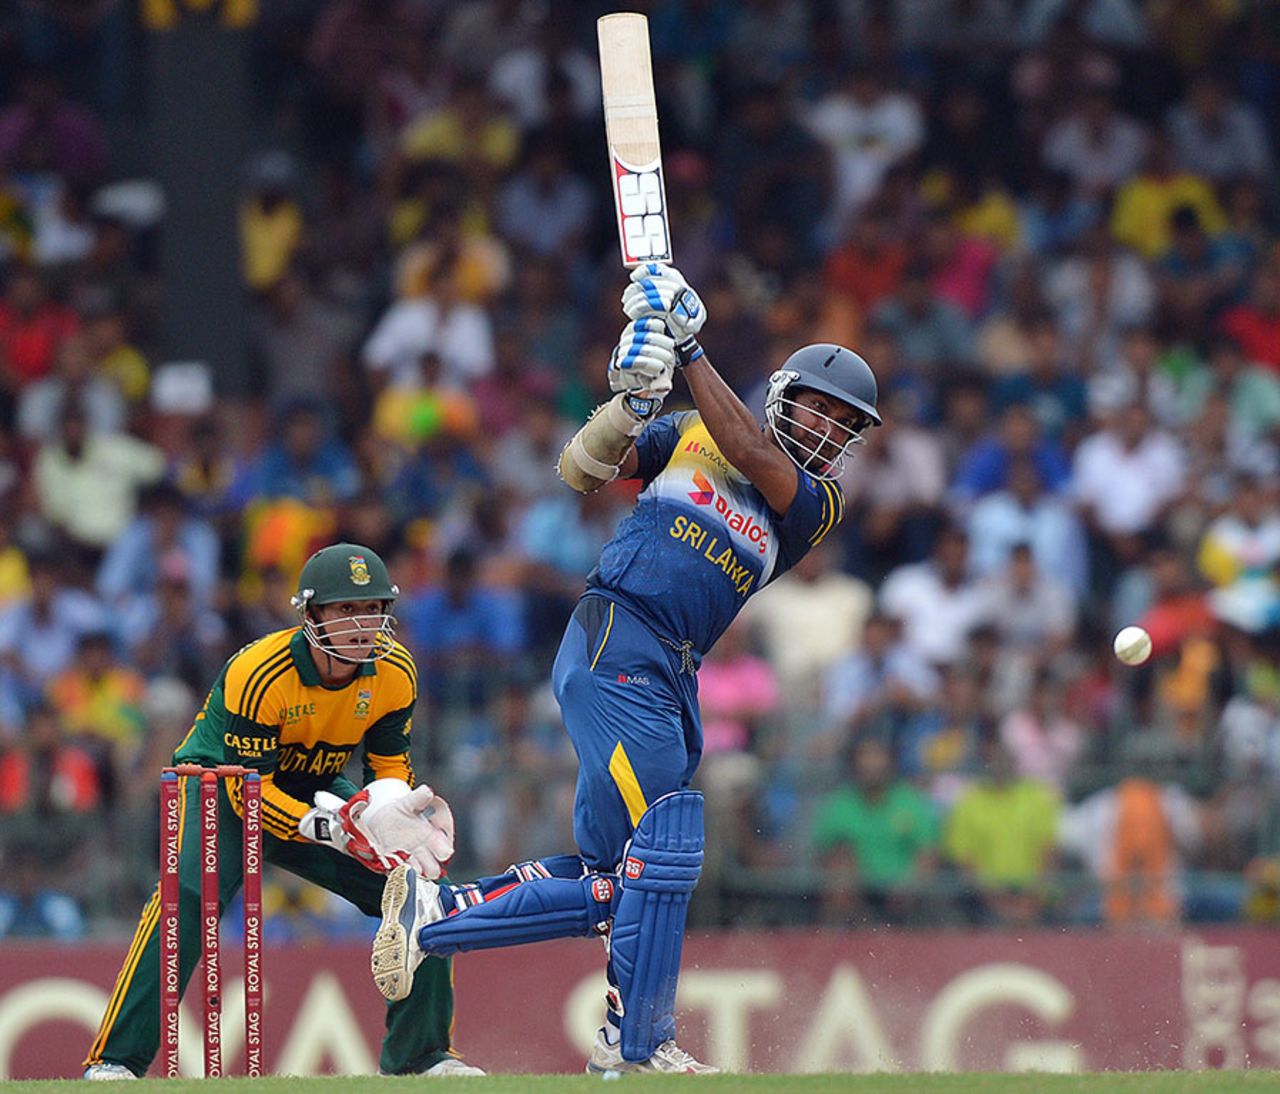 Kumar Sangakkara jumps out of his crease to attack, Sri Lanka v South Africa, 1st ODI, Colombo, July 6, 2014